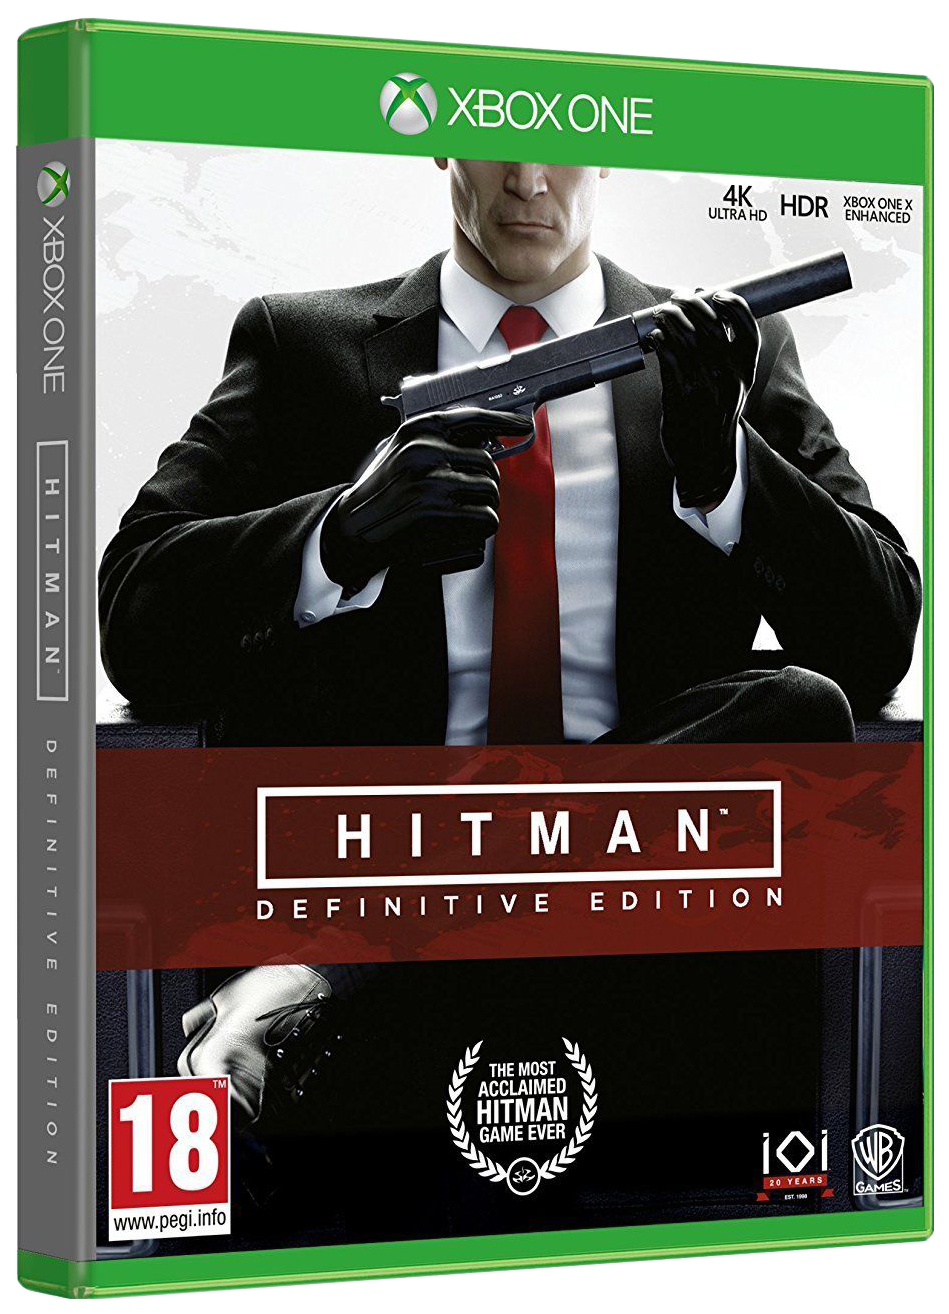 Игра Hitman: Definitive Edition для Xbox One